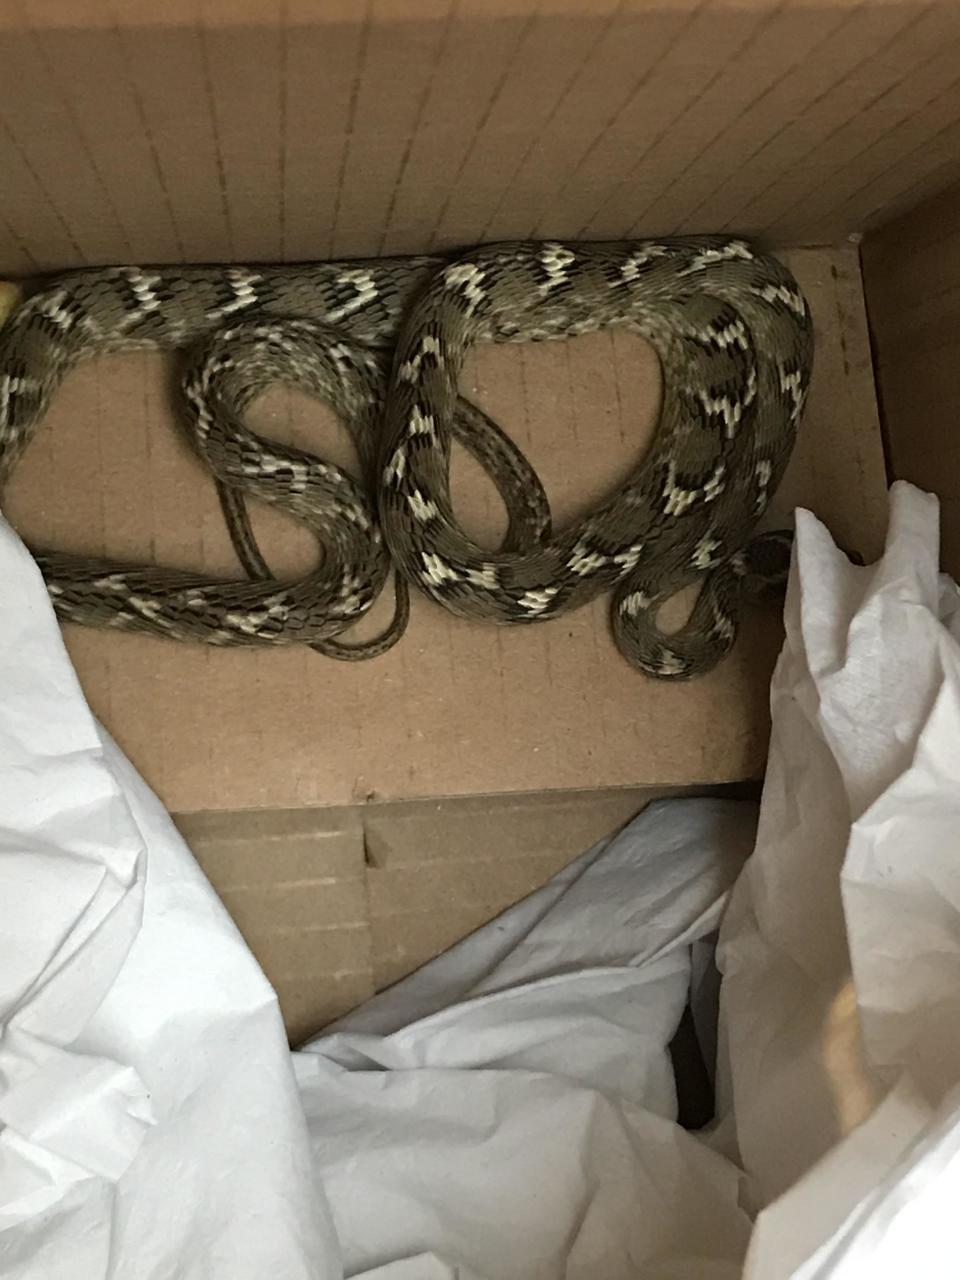 The snake found in Essex